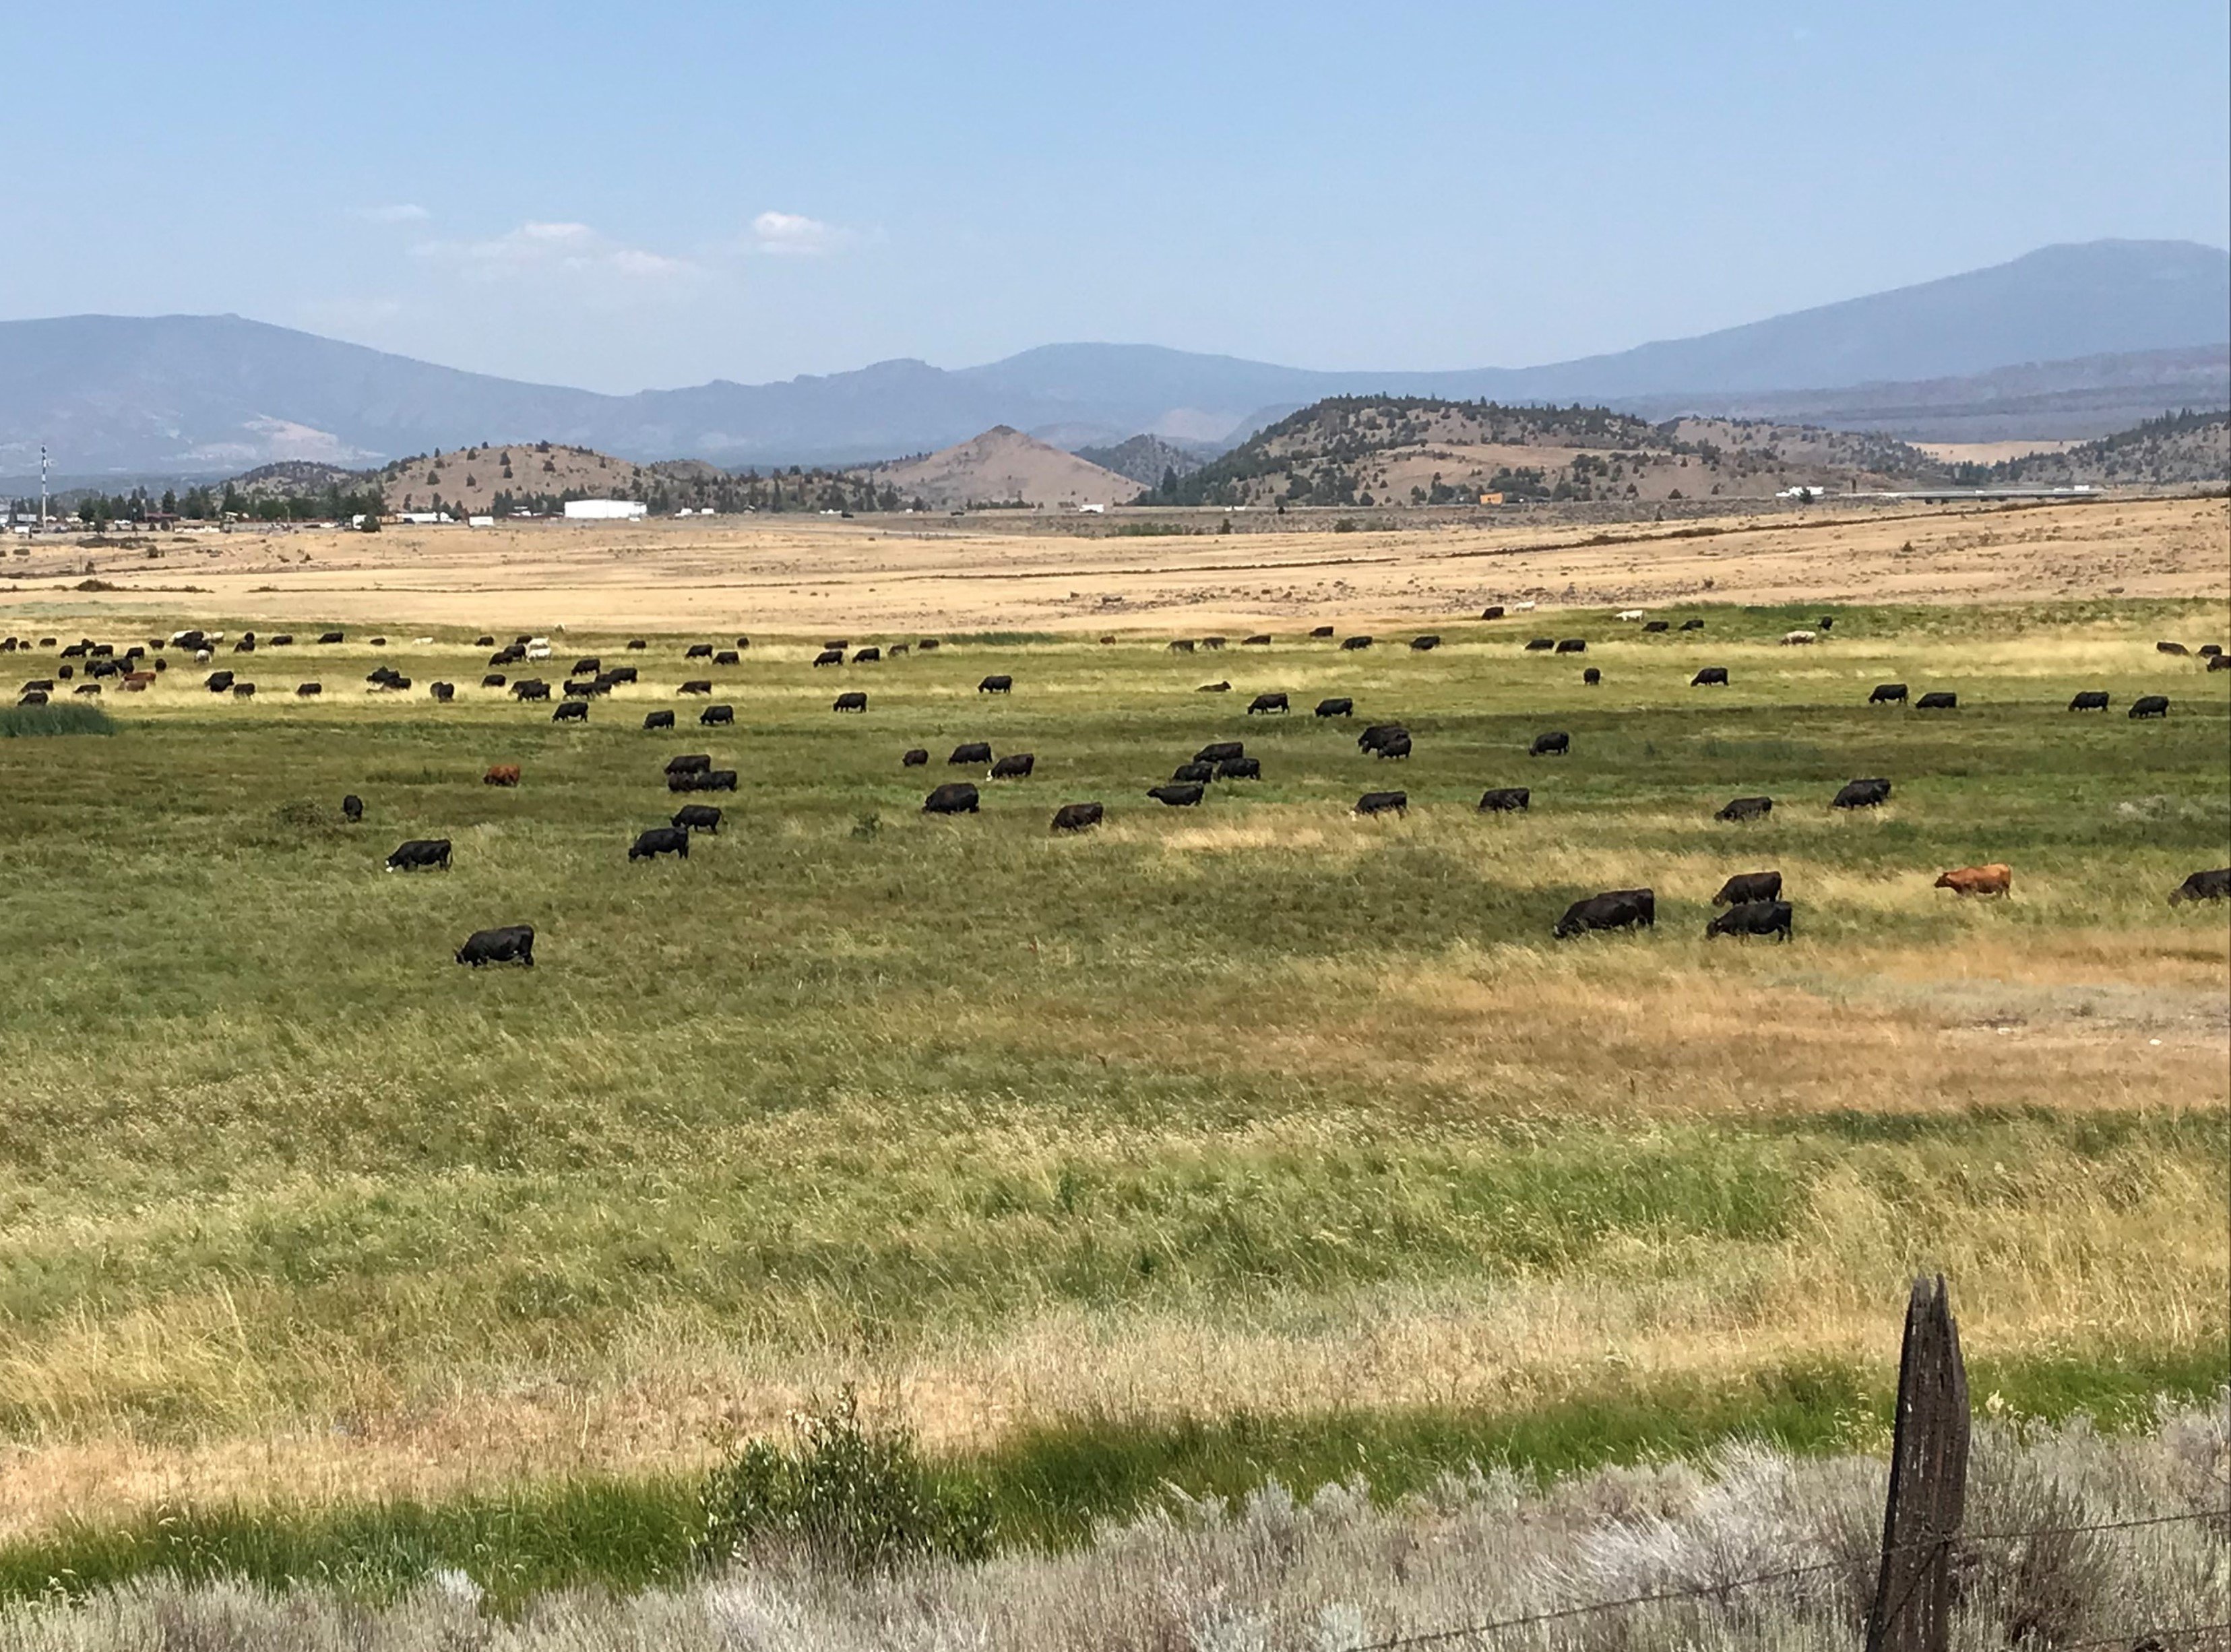 Cattle grazing in grasslands.